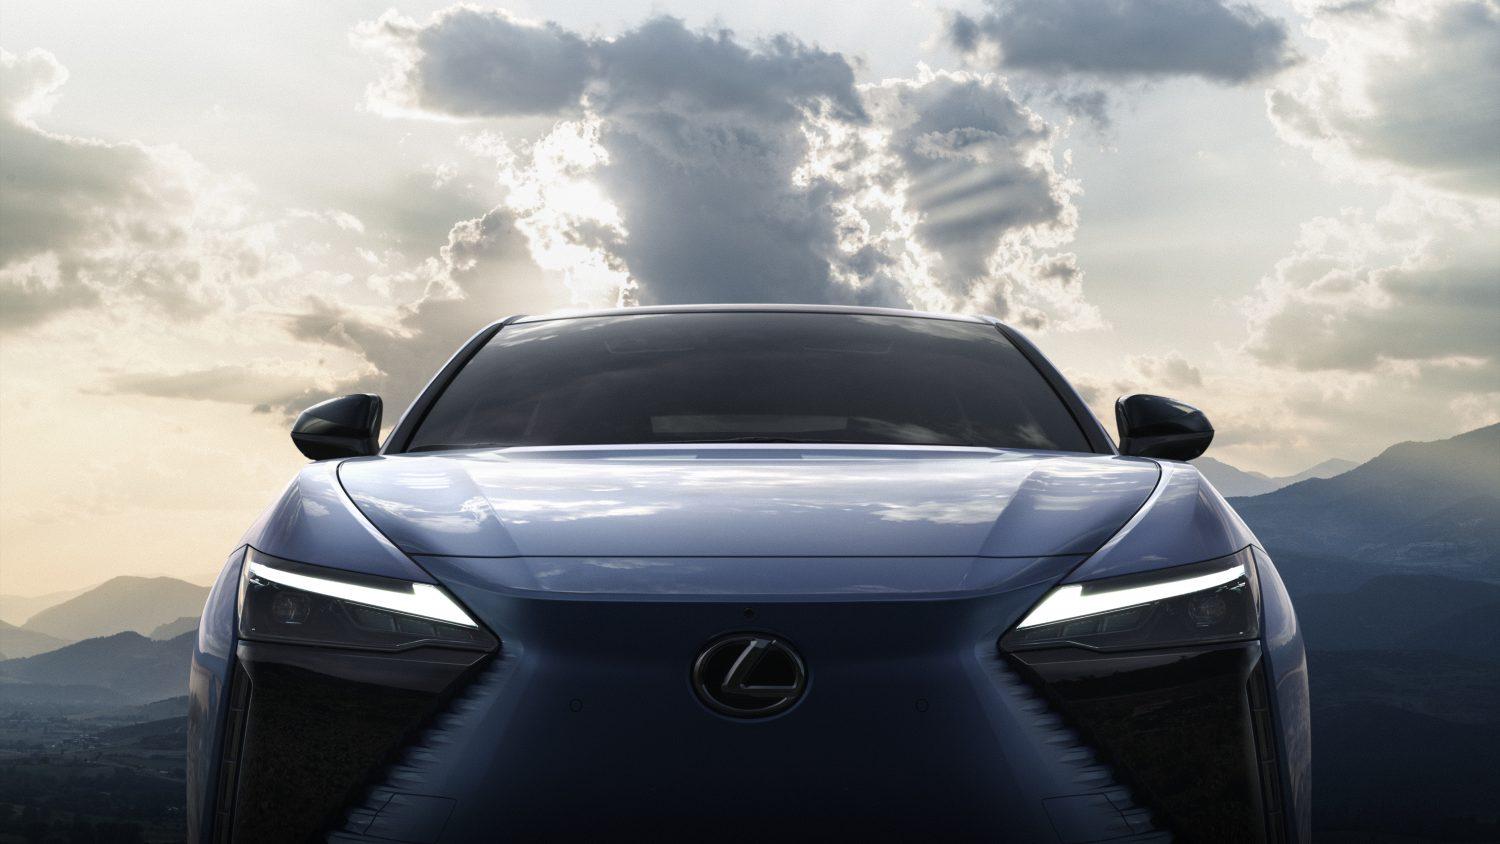 More information about "Lexus' Electrified, Eco-Conscious Future"